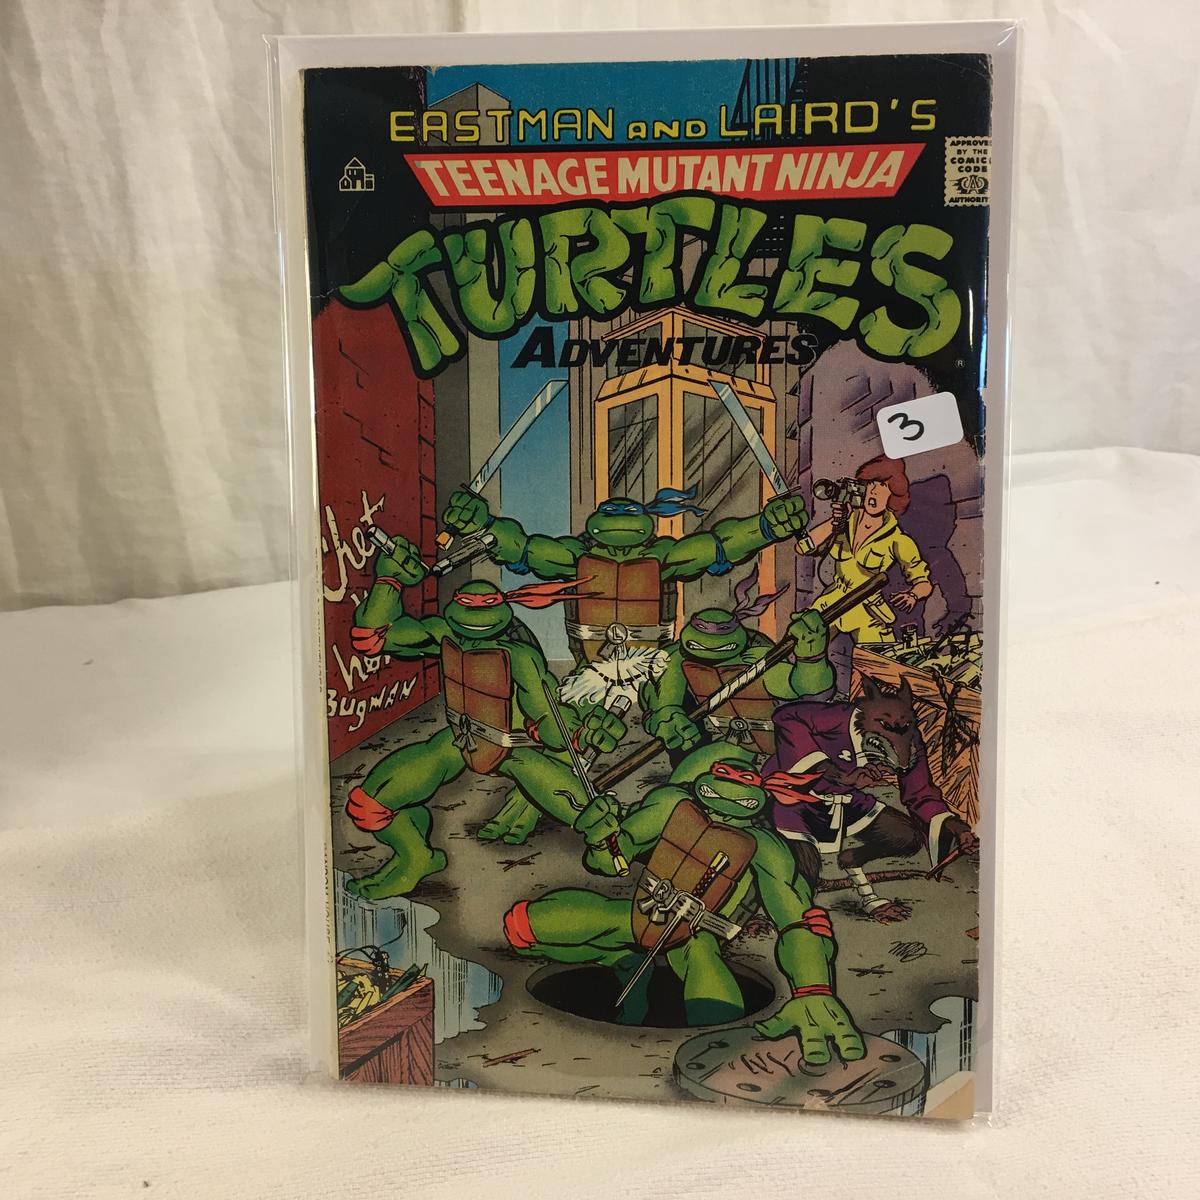 Collector Vintage  Comics Easrman and Laird's Teenage Mutant Ninja Turtles Adventures Comic